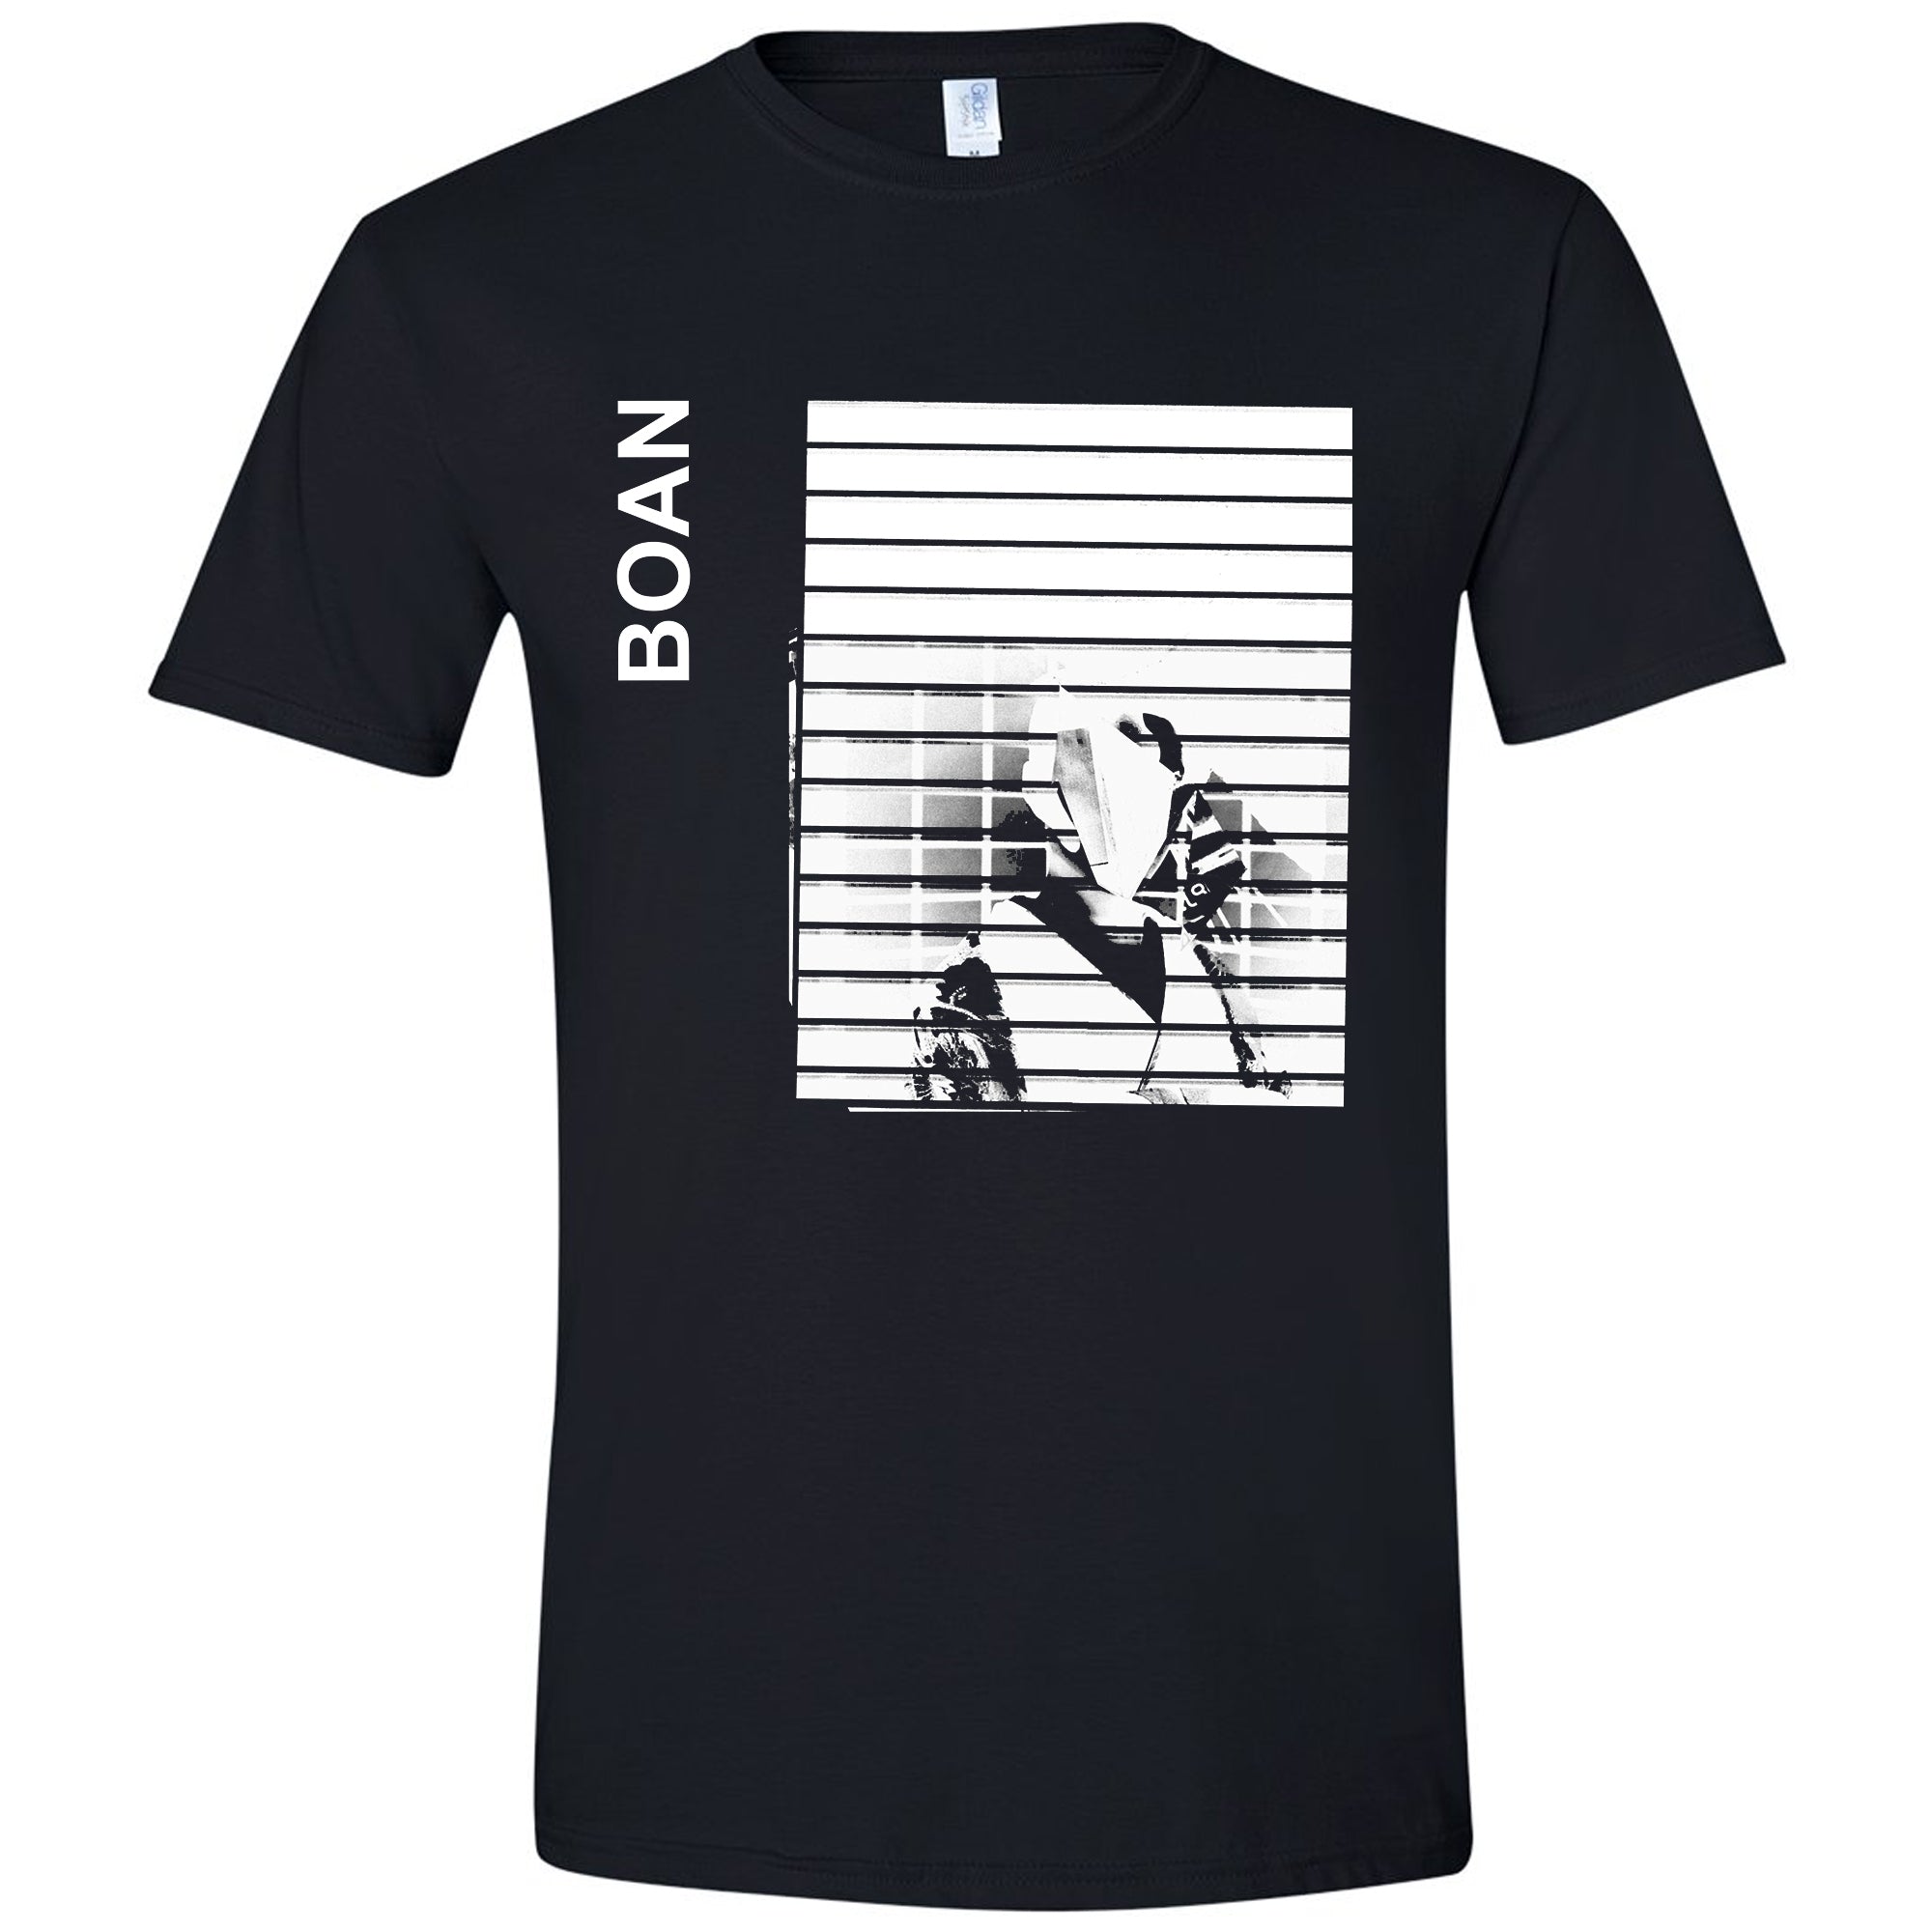 BOAN - "Mentiras" T-Shirt